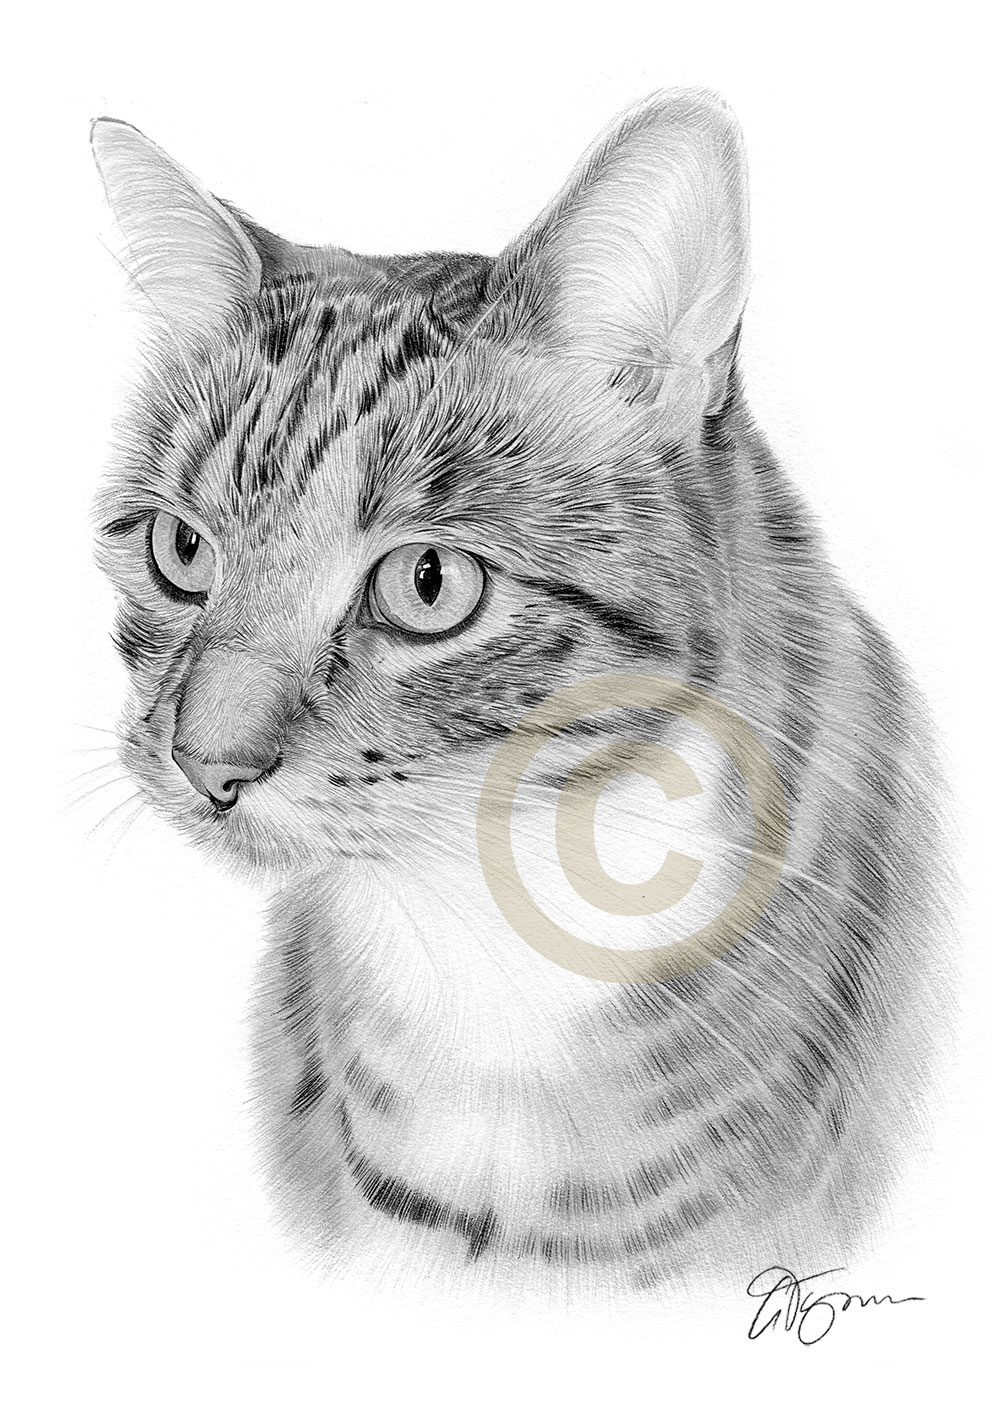 Pet portrait commission of a cat by artist Gary Tymon